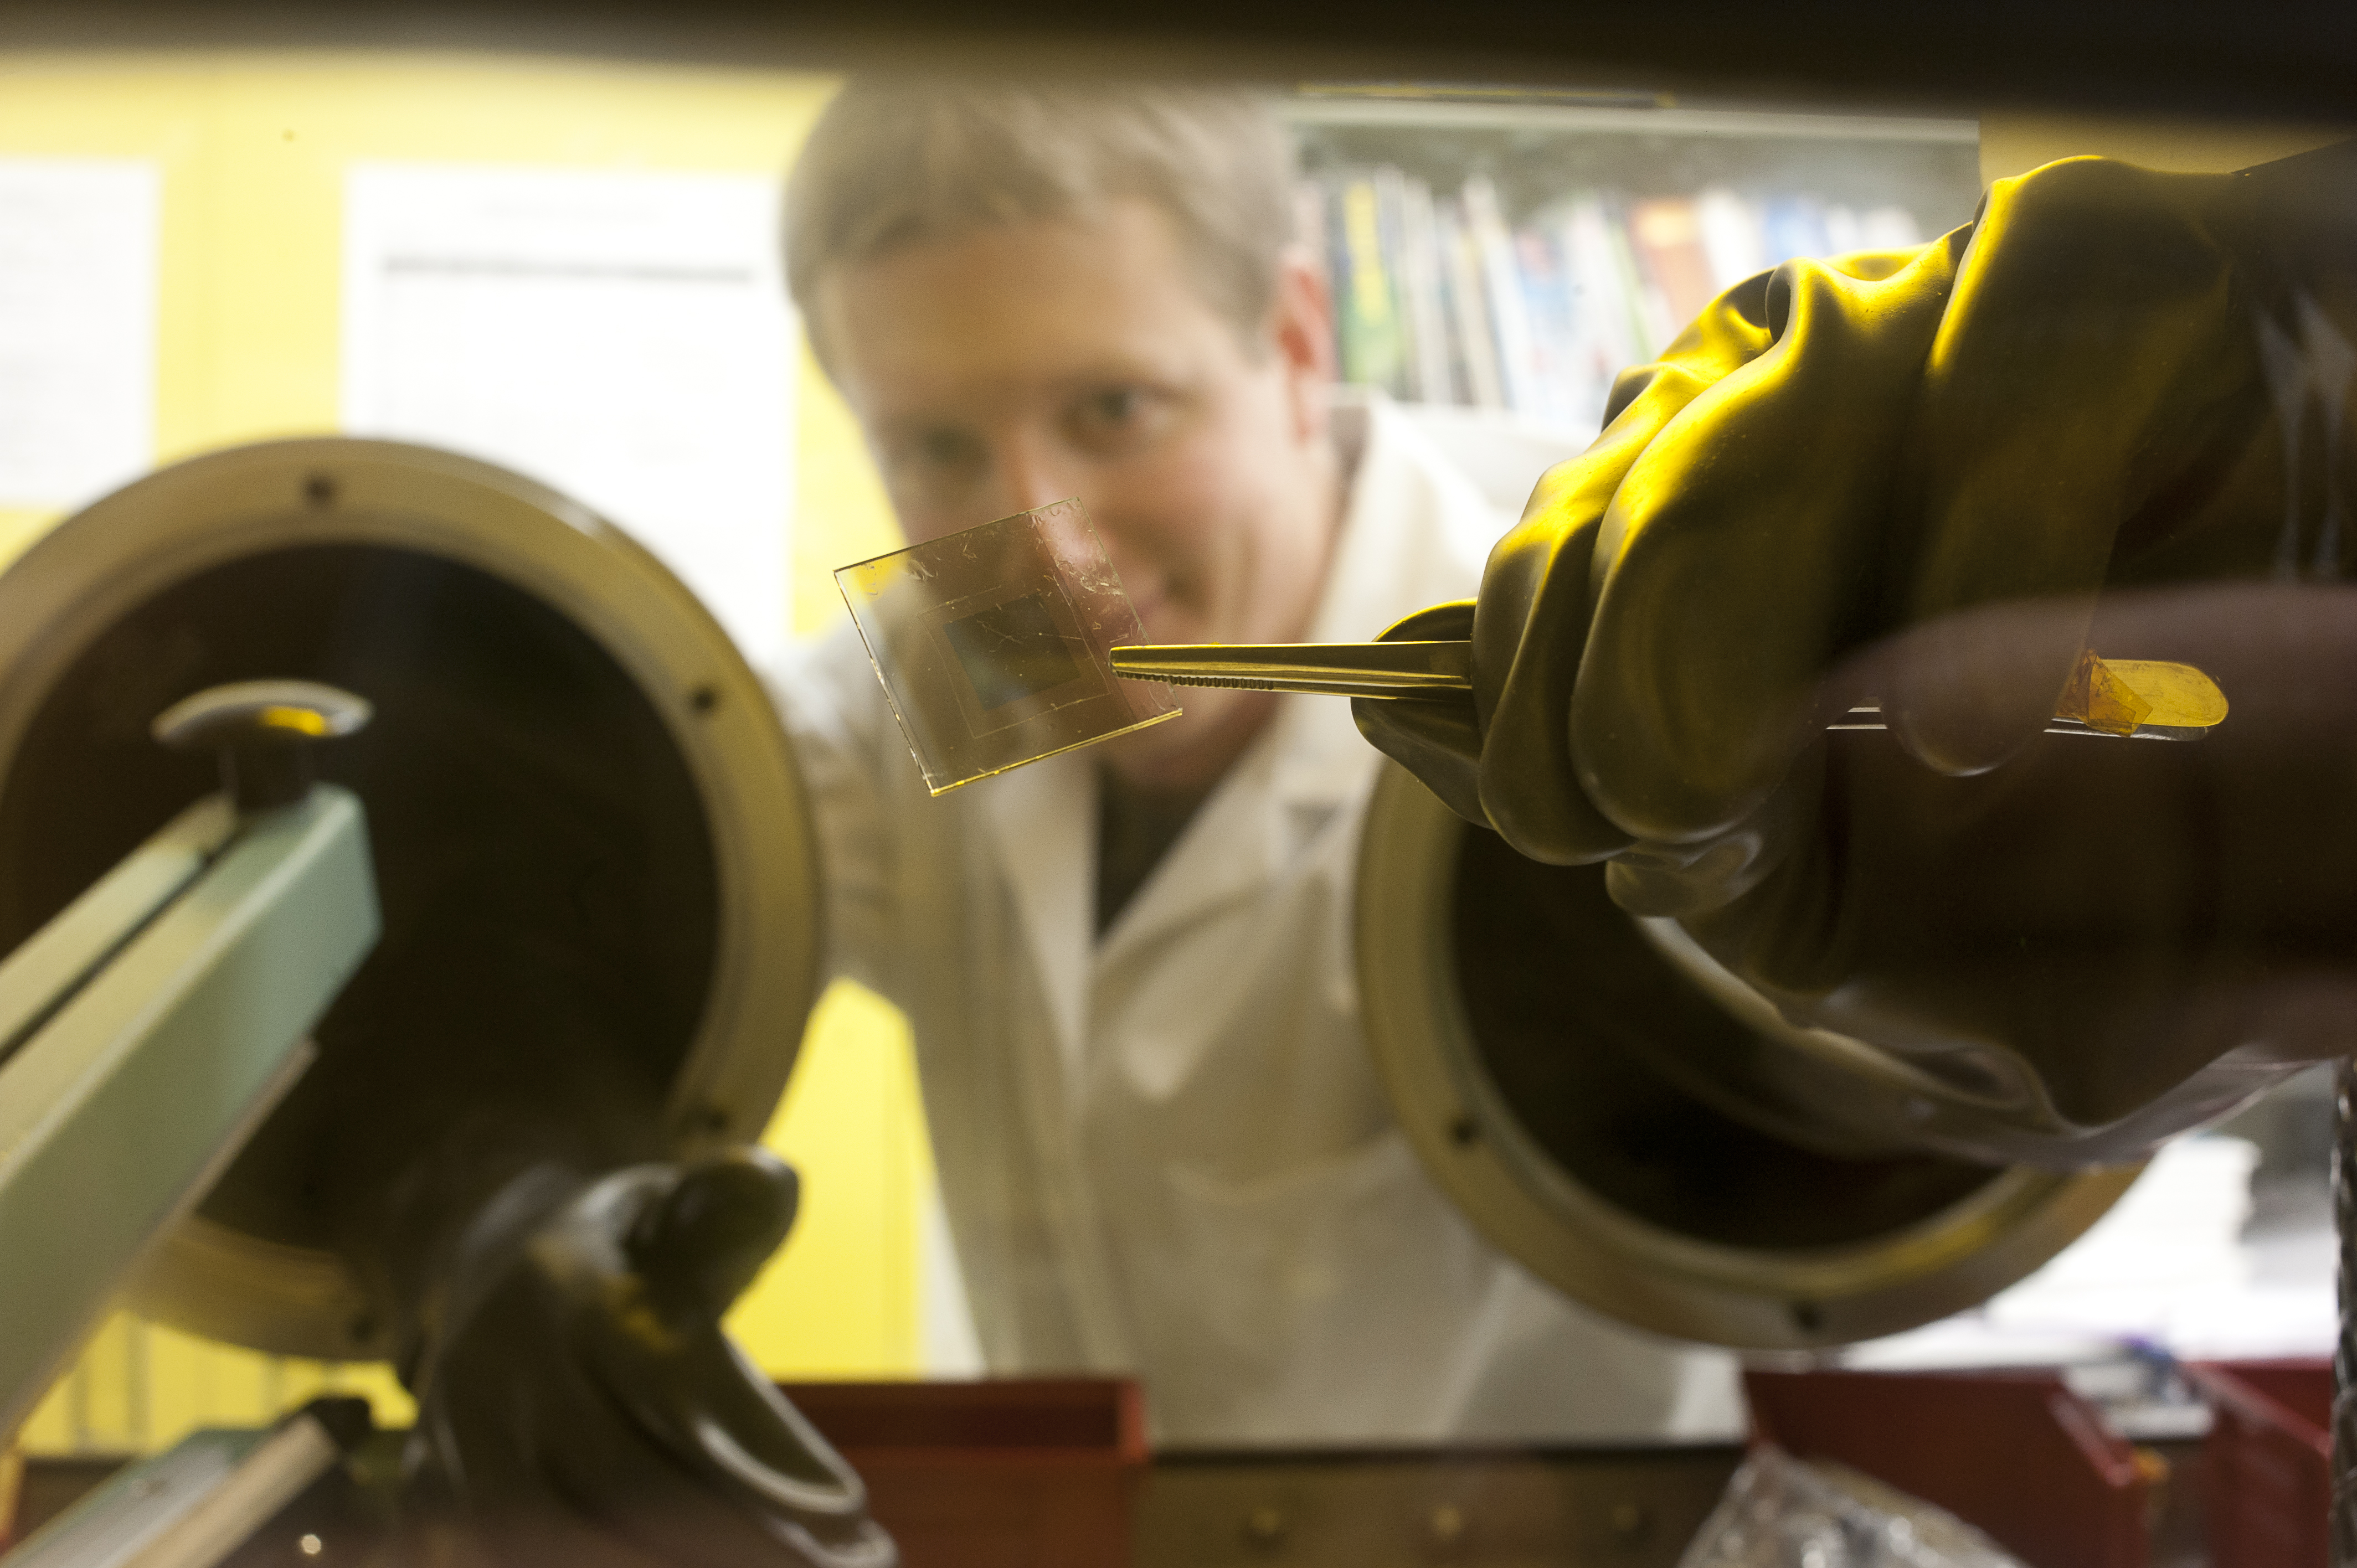 man in a lab coat operates equipment